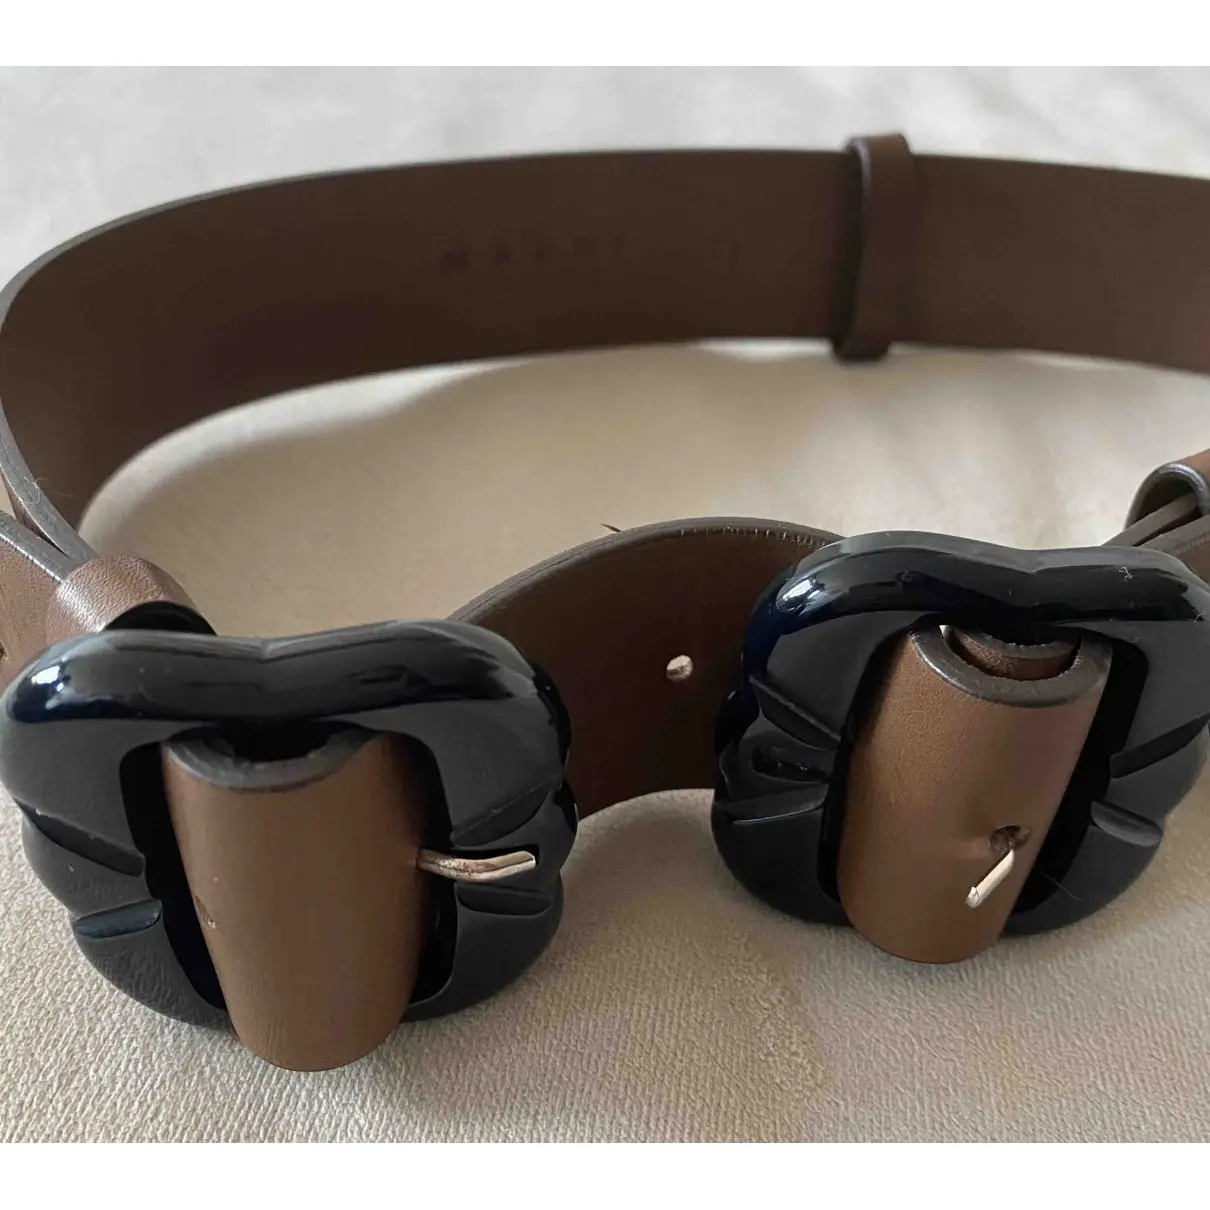 Buy Marni Leather belt online